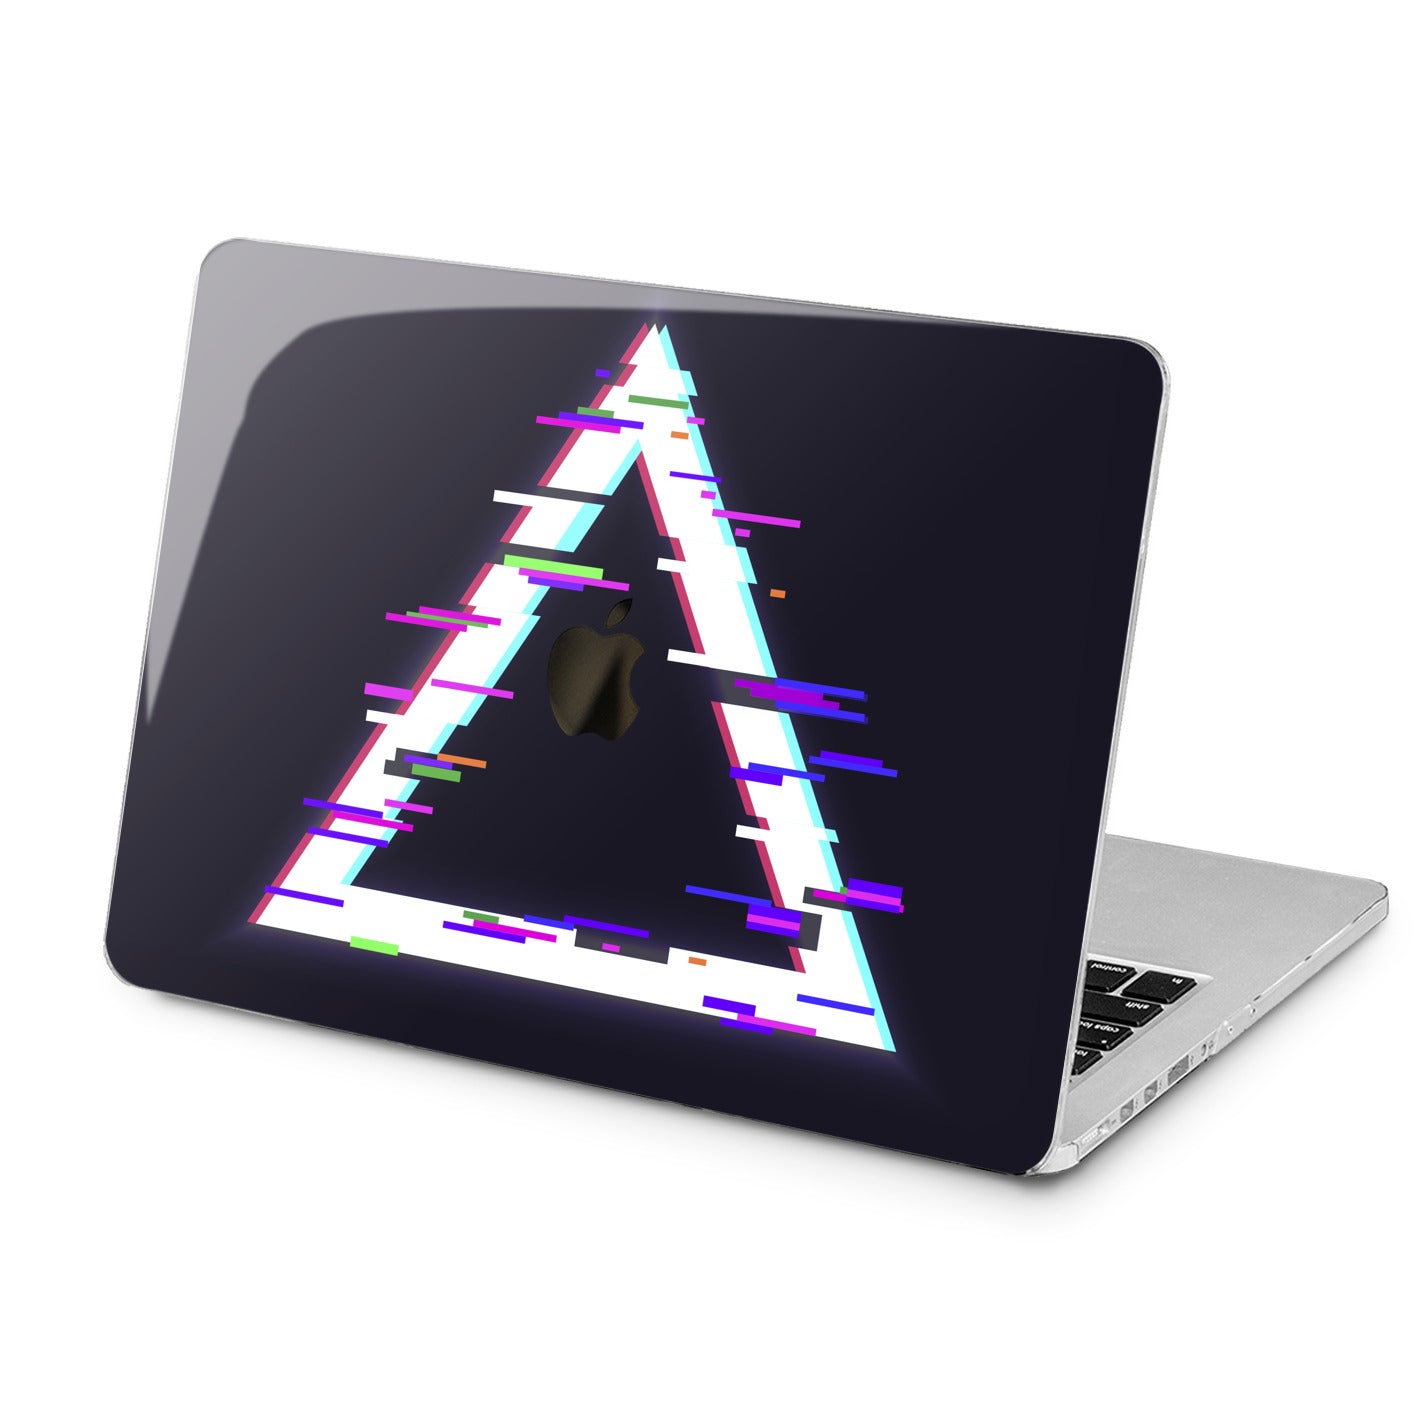 Lex Altern Unique Triangle Case for your Laptop Apple Macbook.